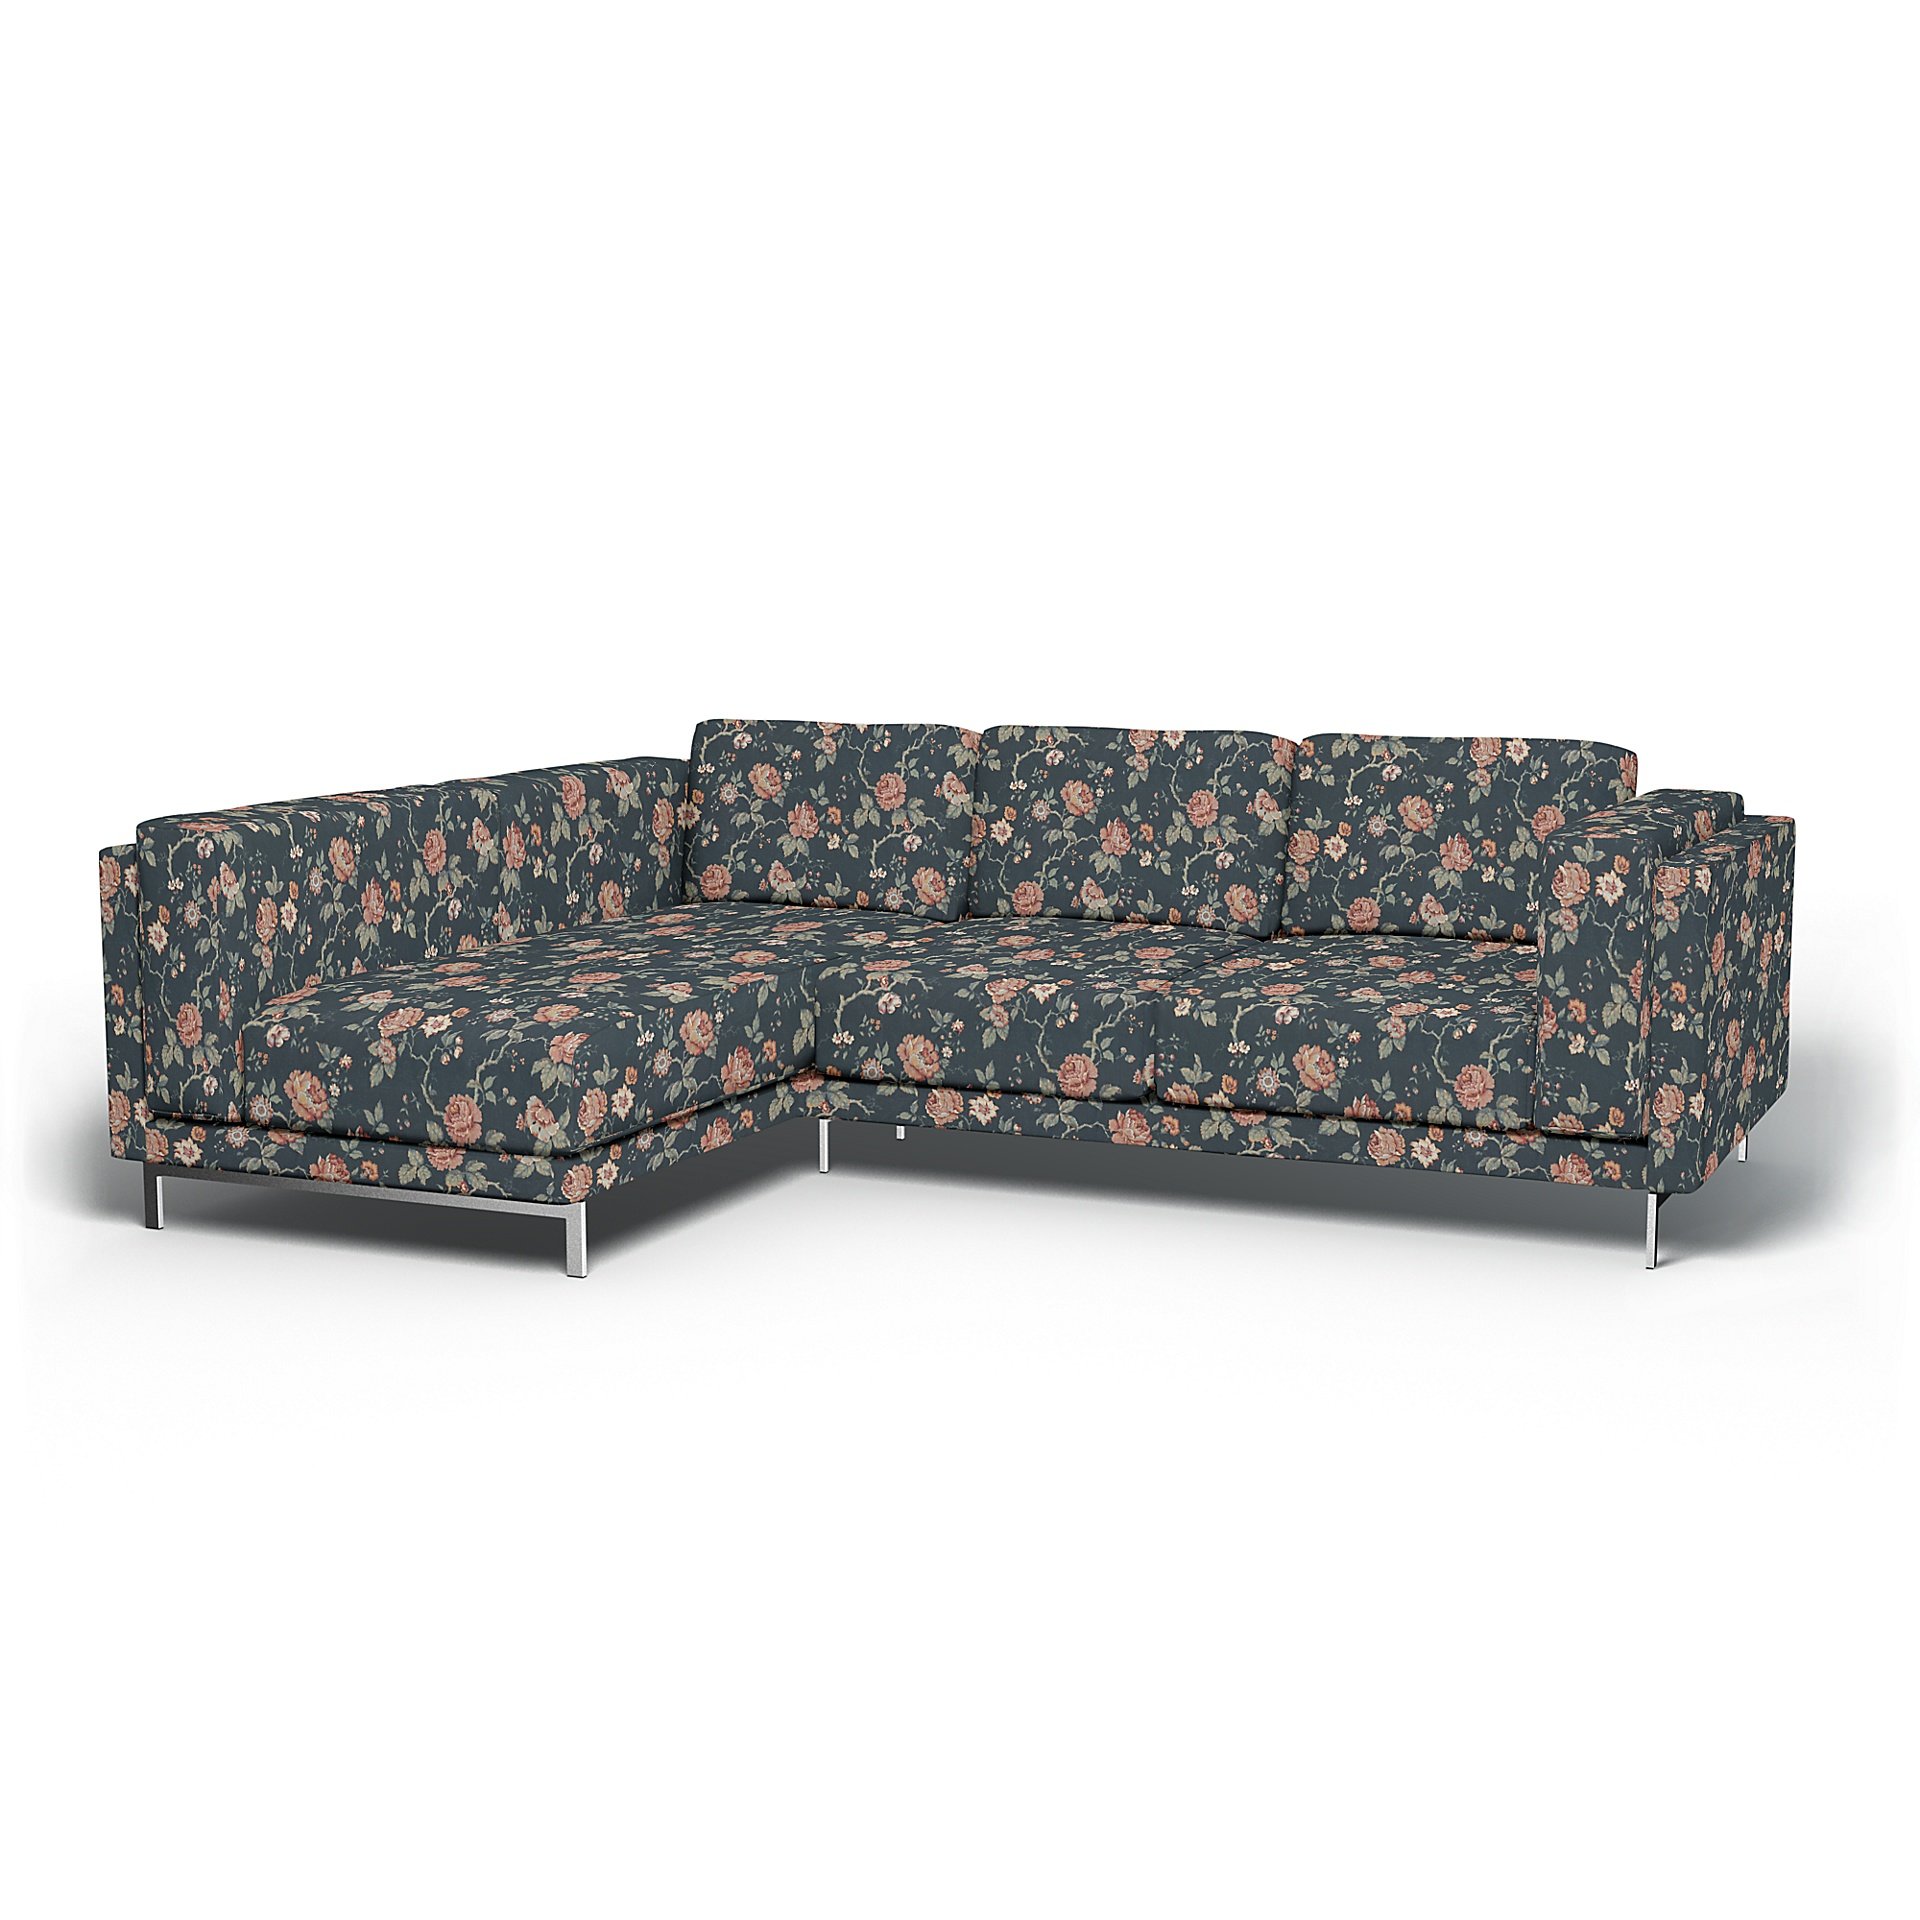 IKEA - Nockeby 3 Seater Sofa with Left Chaise Cover, Rosentrad Dark, BEMZ x BORASTAPETER COLLECTION 